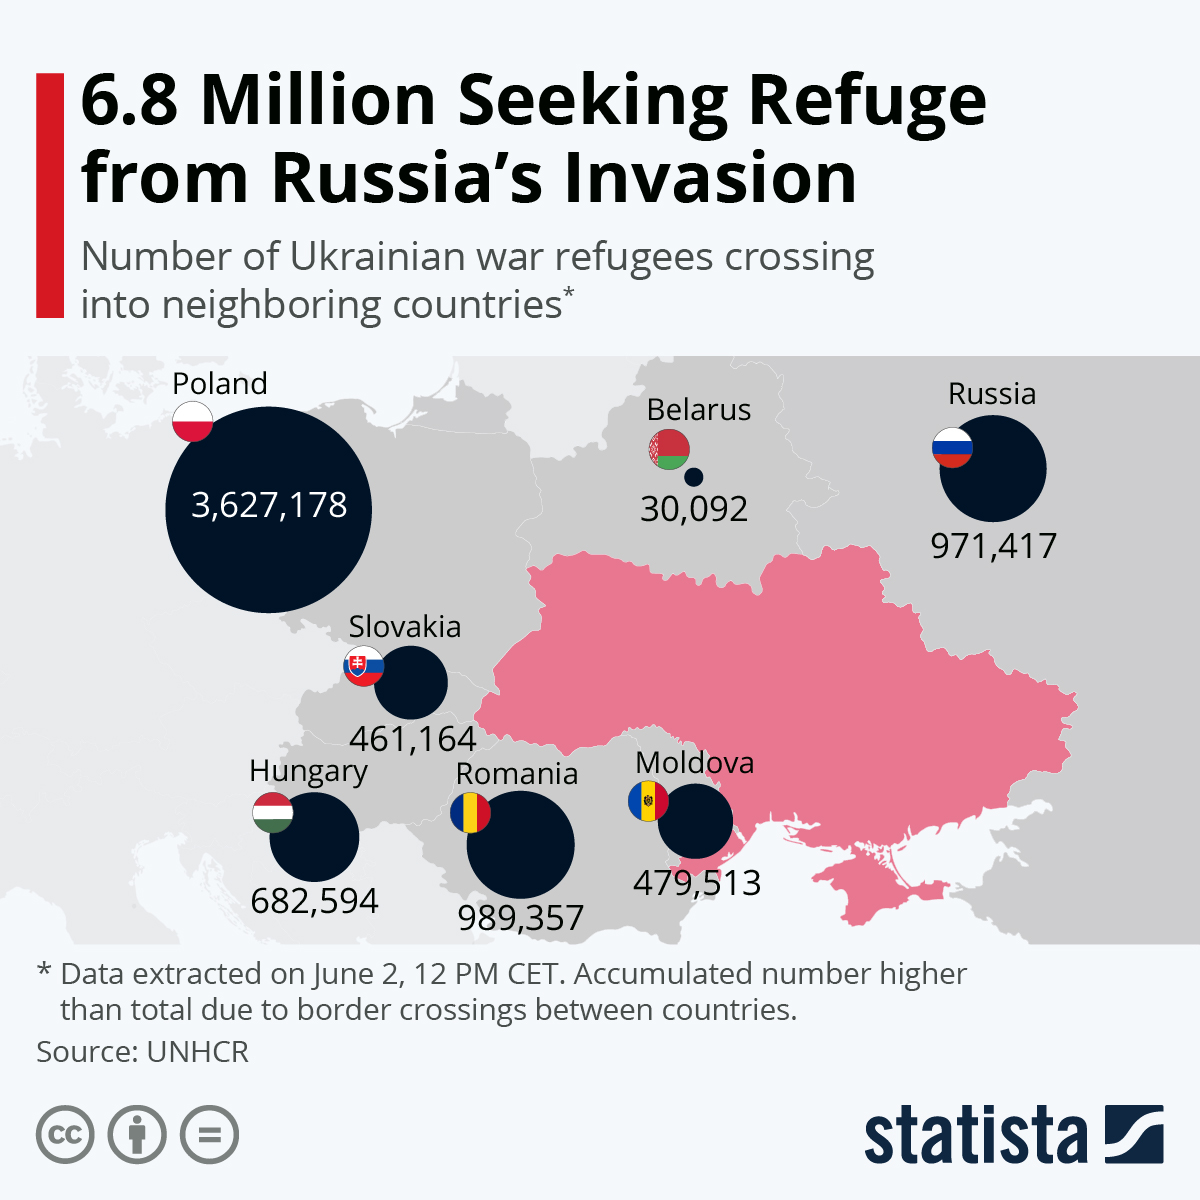 6.8 Million Seeking Refuge from Russian Invasion